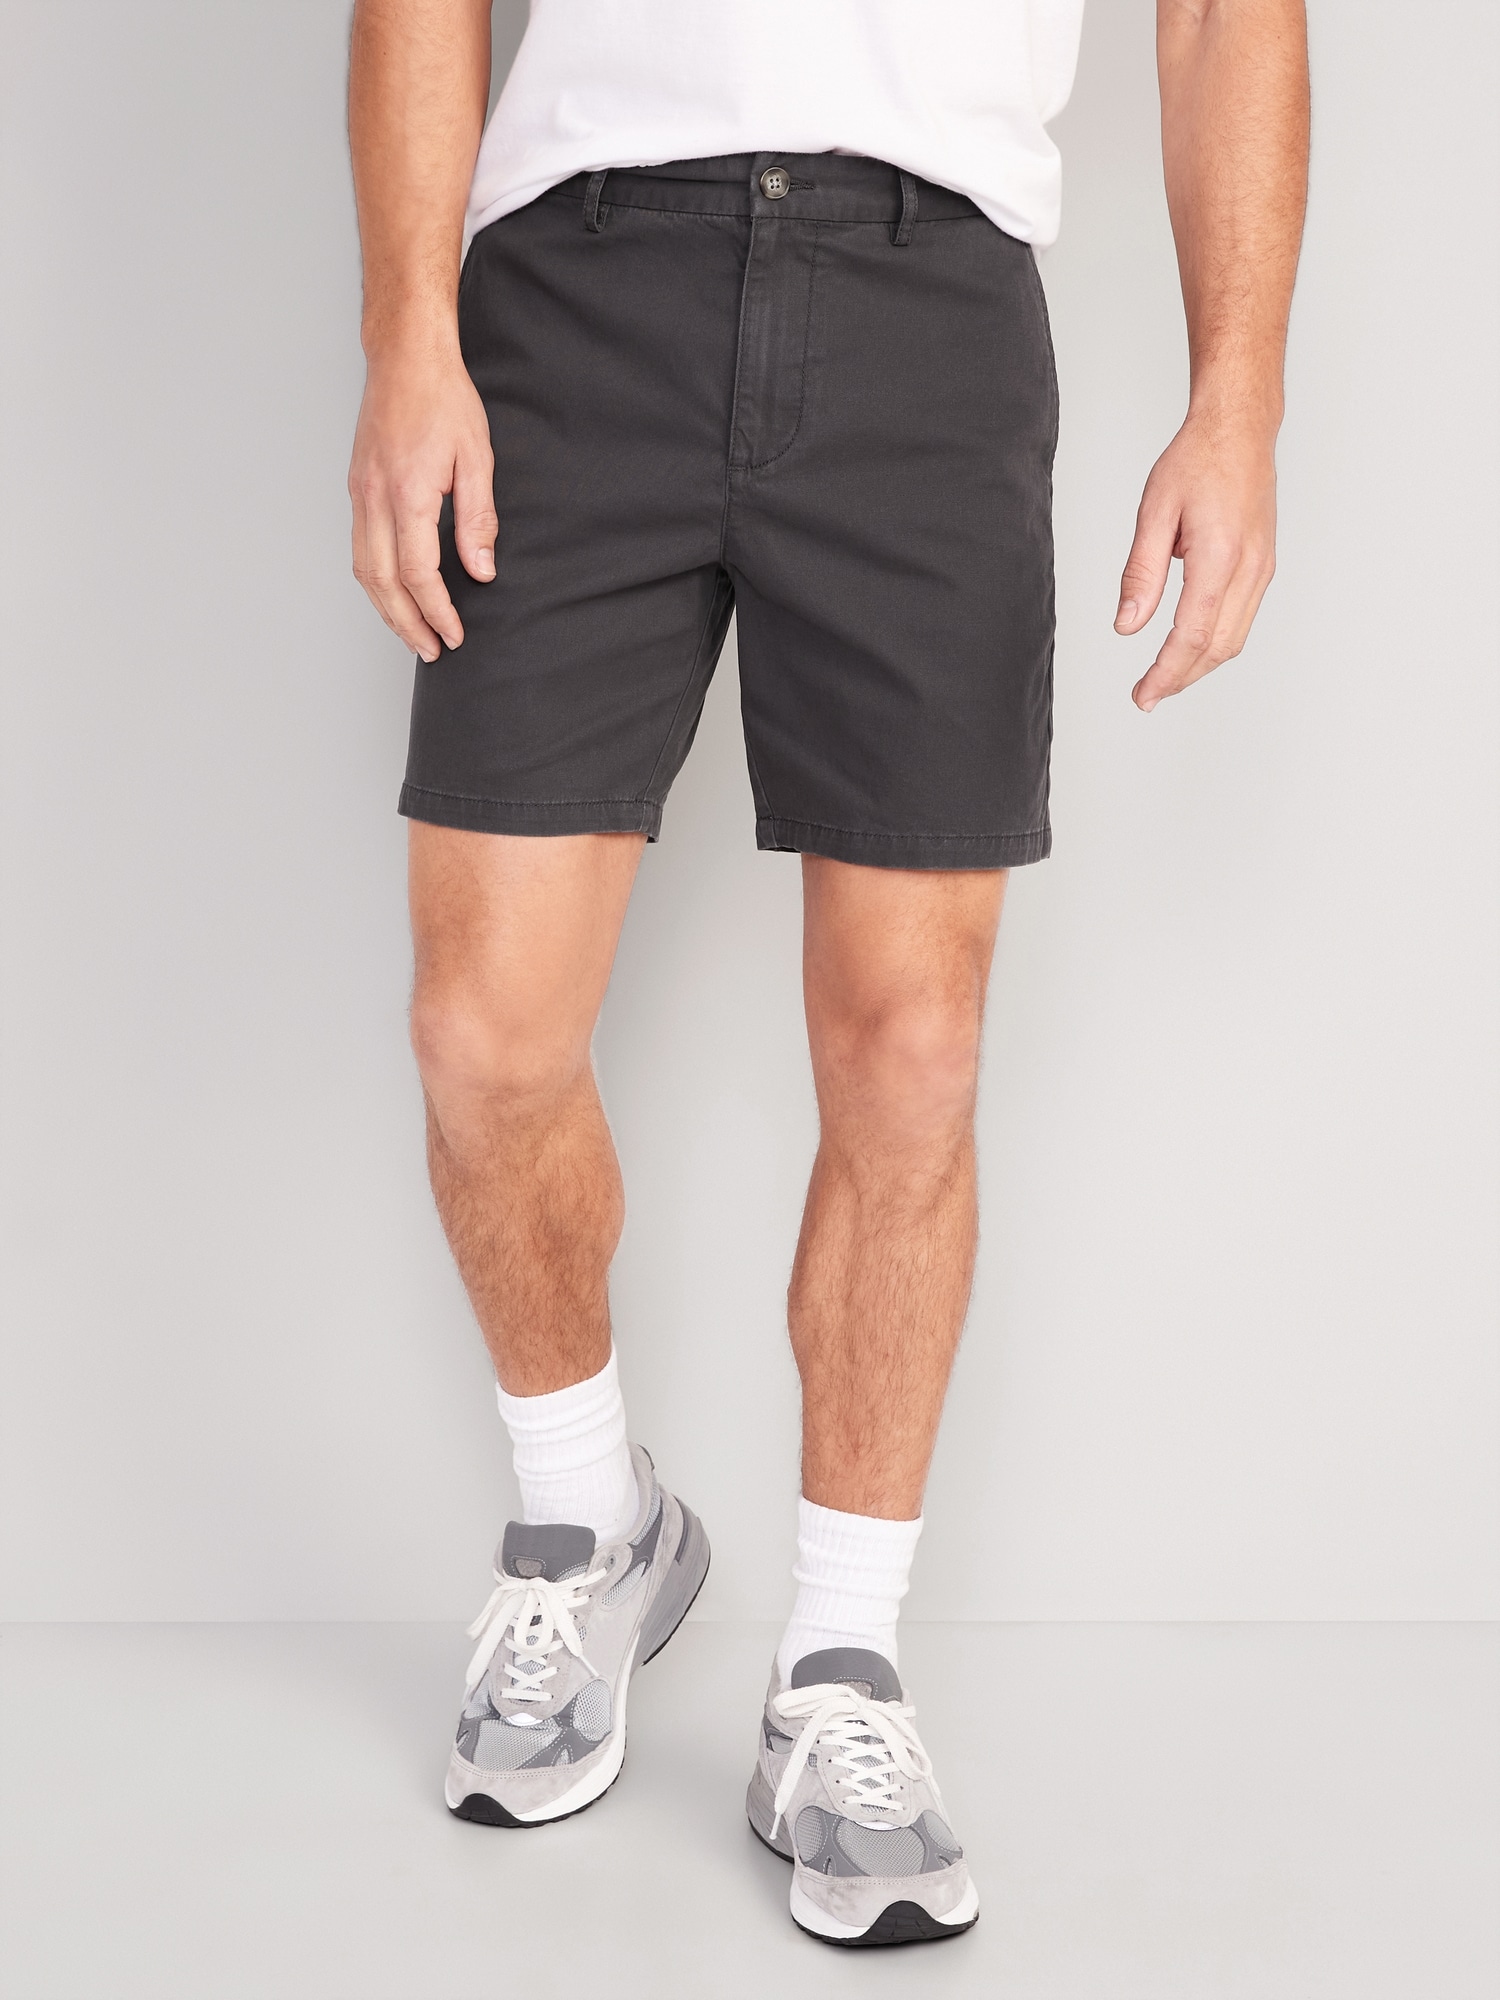 Old Navy Slim Built-In Flex Ultimate Chino Shorts for Men -- 7-inch inseam black. 1